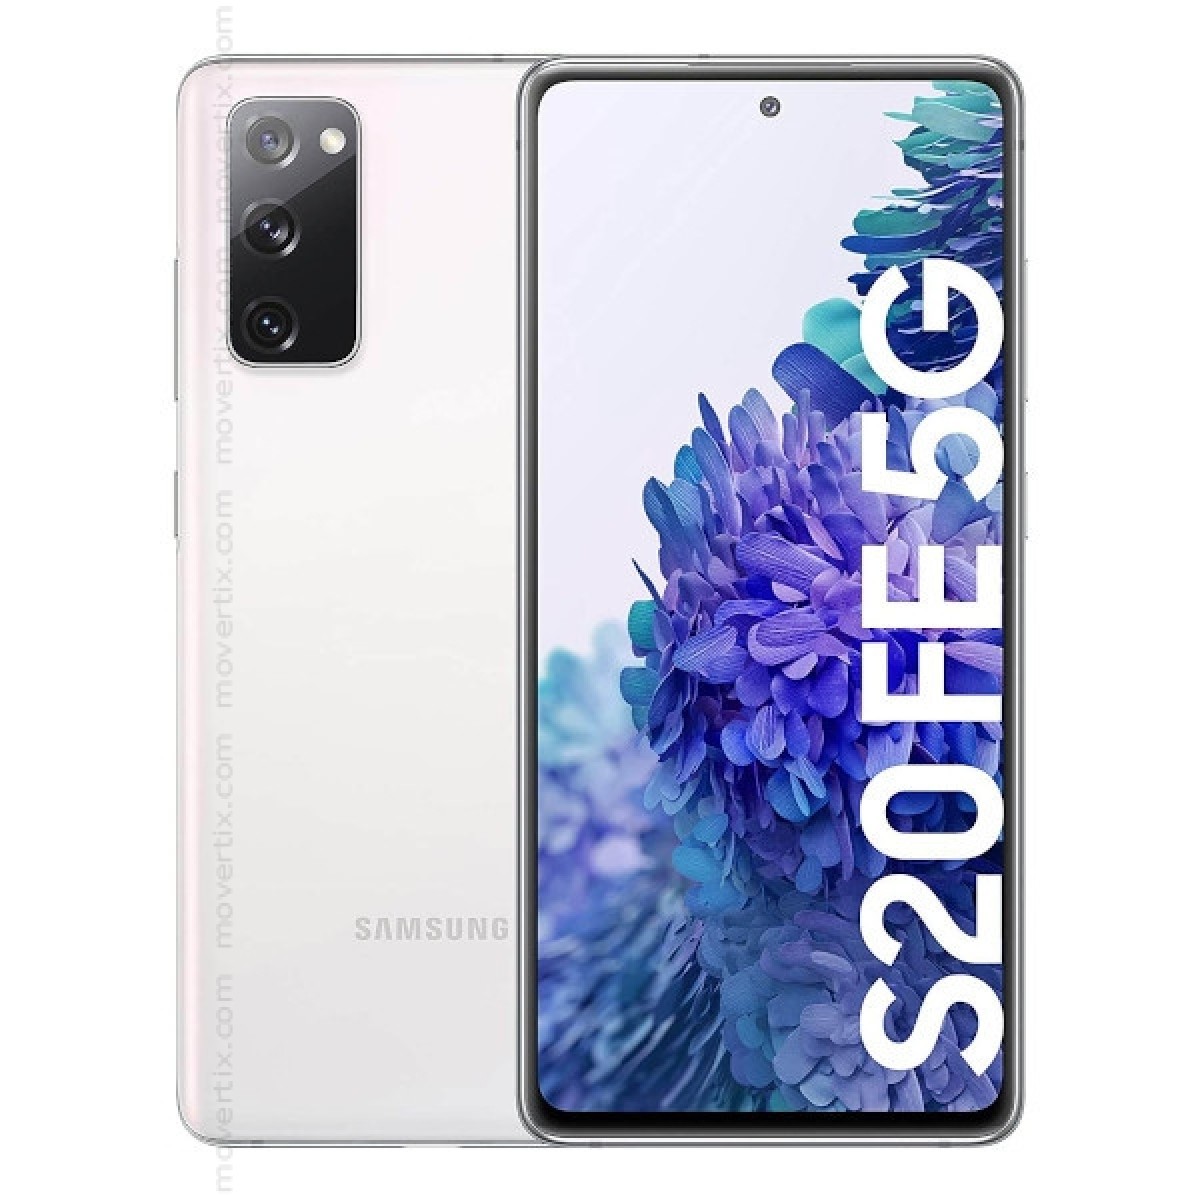 Samsung Galaxy S20 FE 5G Double SIM Blanc avec 128Go et 6Go RAM -  SM-G781B/DS (8806090709715)